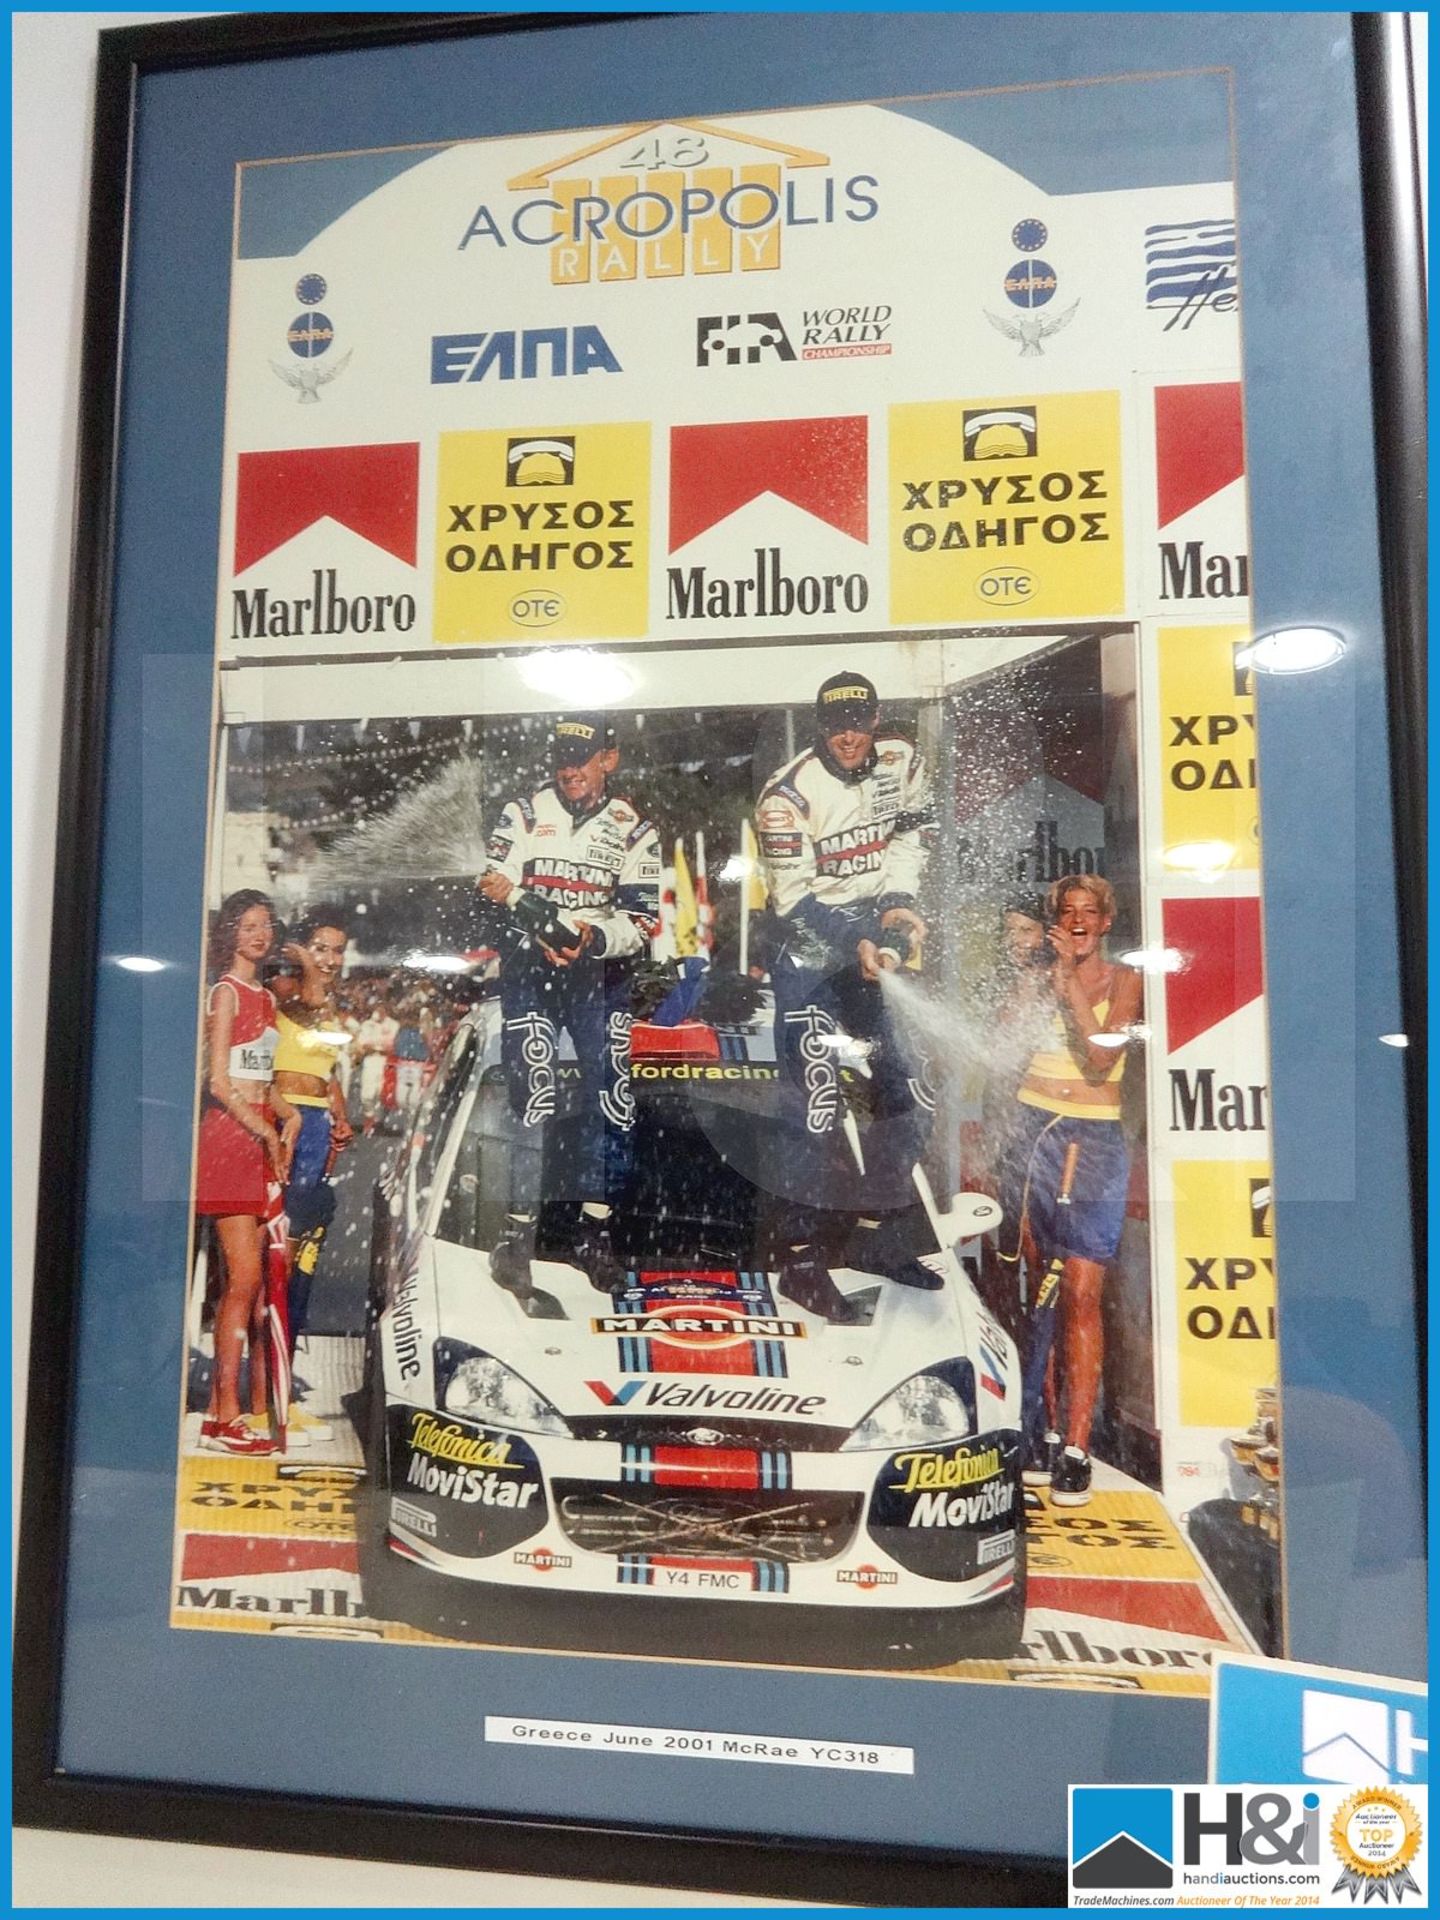 Framed Colin McRae Acropolis Rally podium win photograph. Greece June 2001 engine number YC318. Neve - Bild 4 aus 4